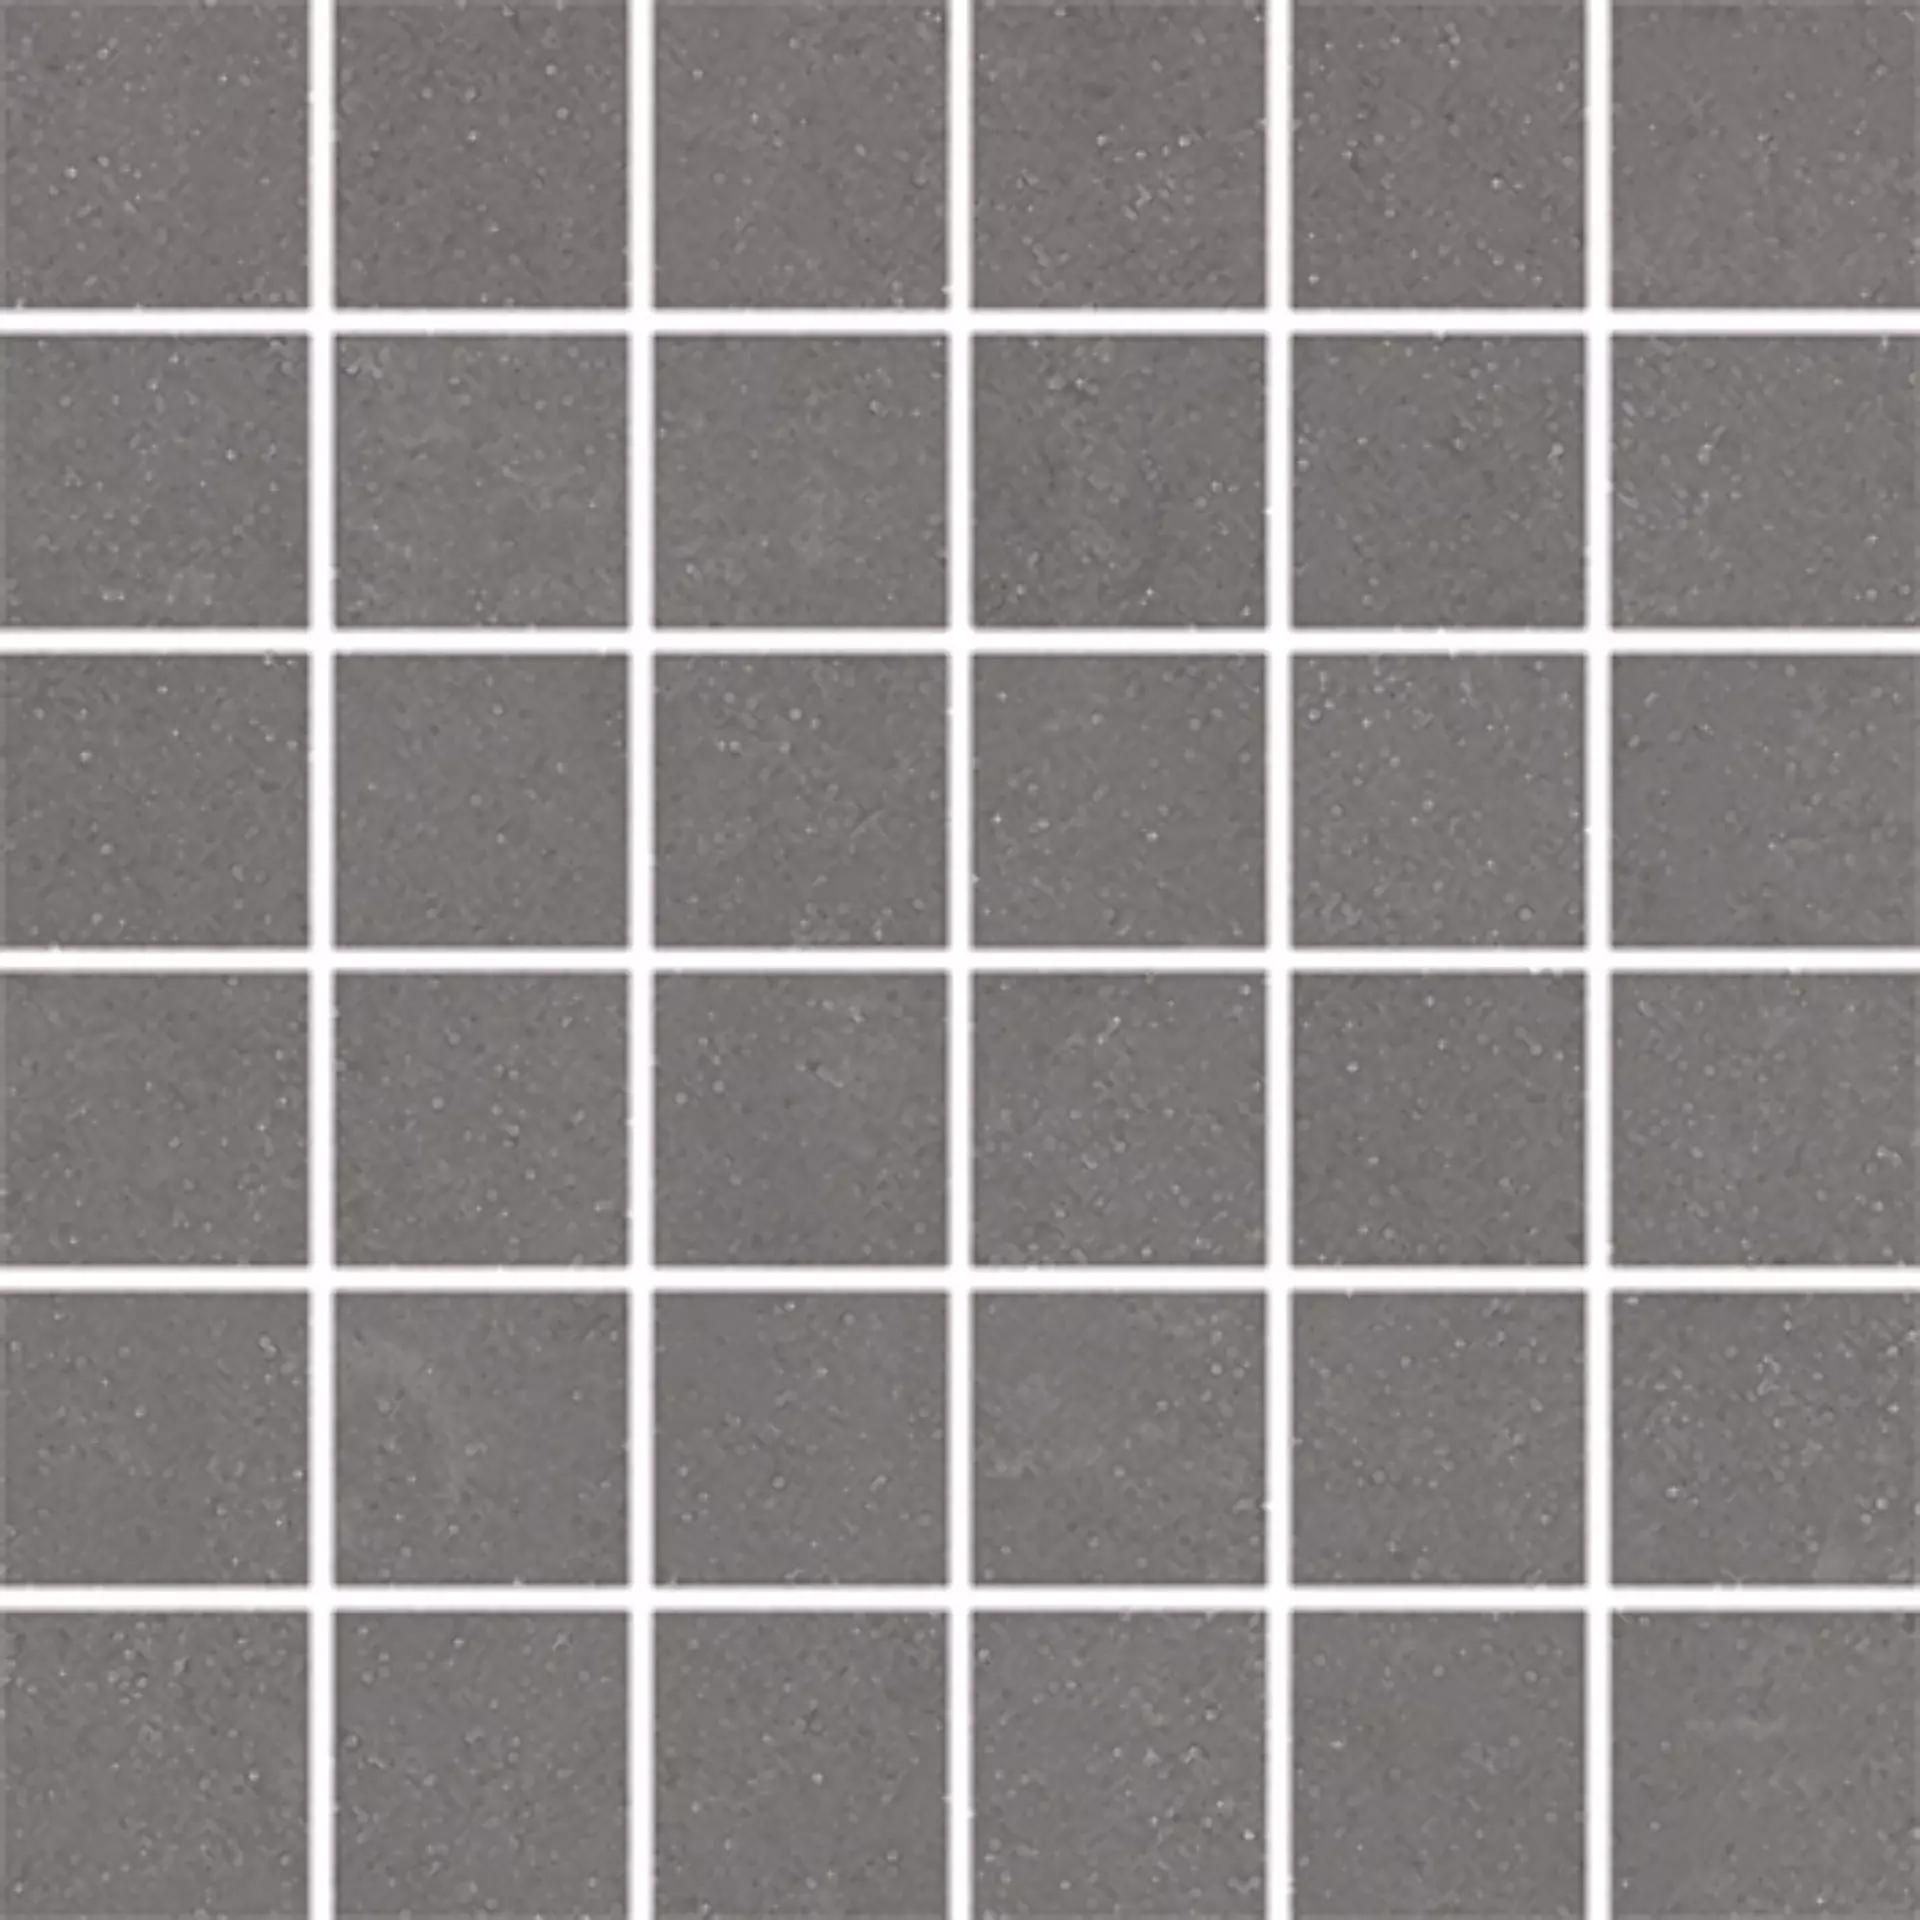 Villeroy & Boch Lobby Dark Grey Matt Mosaik (5x5) 2706-LO61 30x30cm 6mm